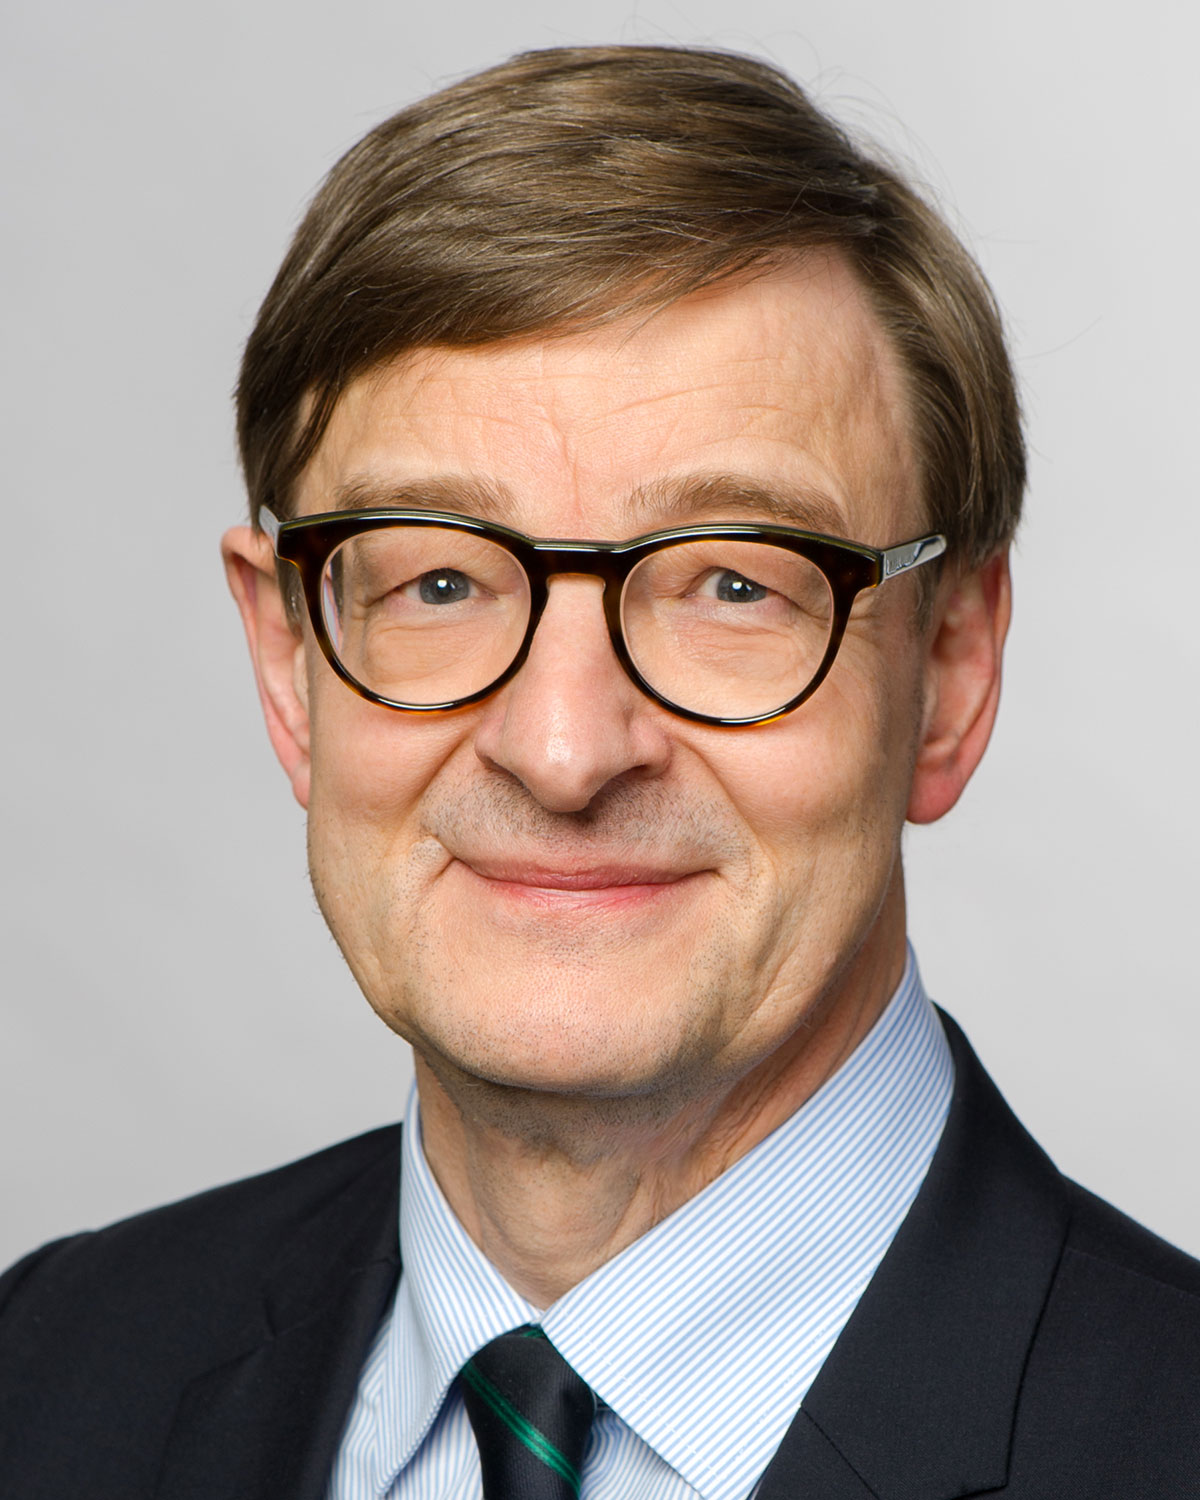 Portrait of Prof. Dr. Dr. h.c. mult. Otmar Wiestler, Chairman of TUM Board of Trustees, President of the Helmholtz Association

